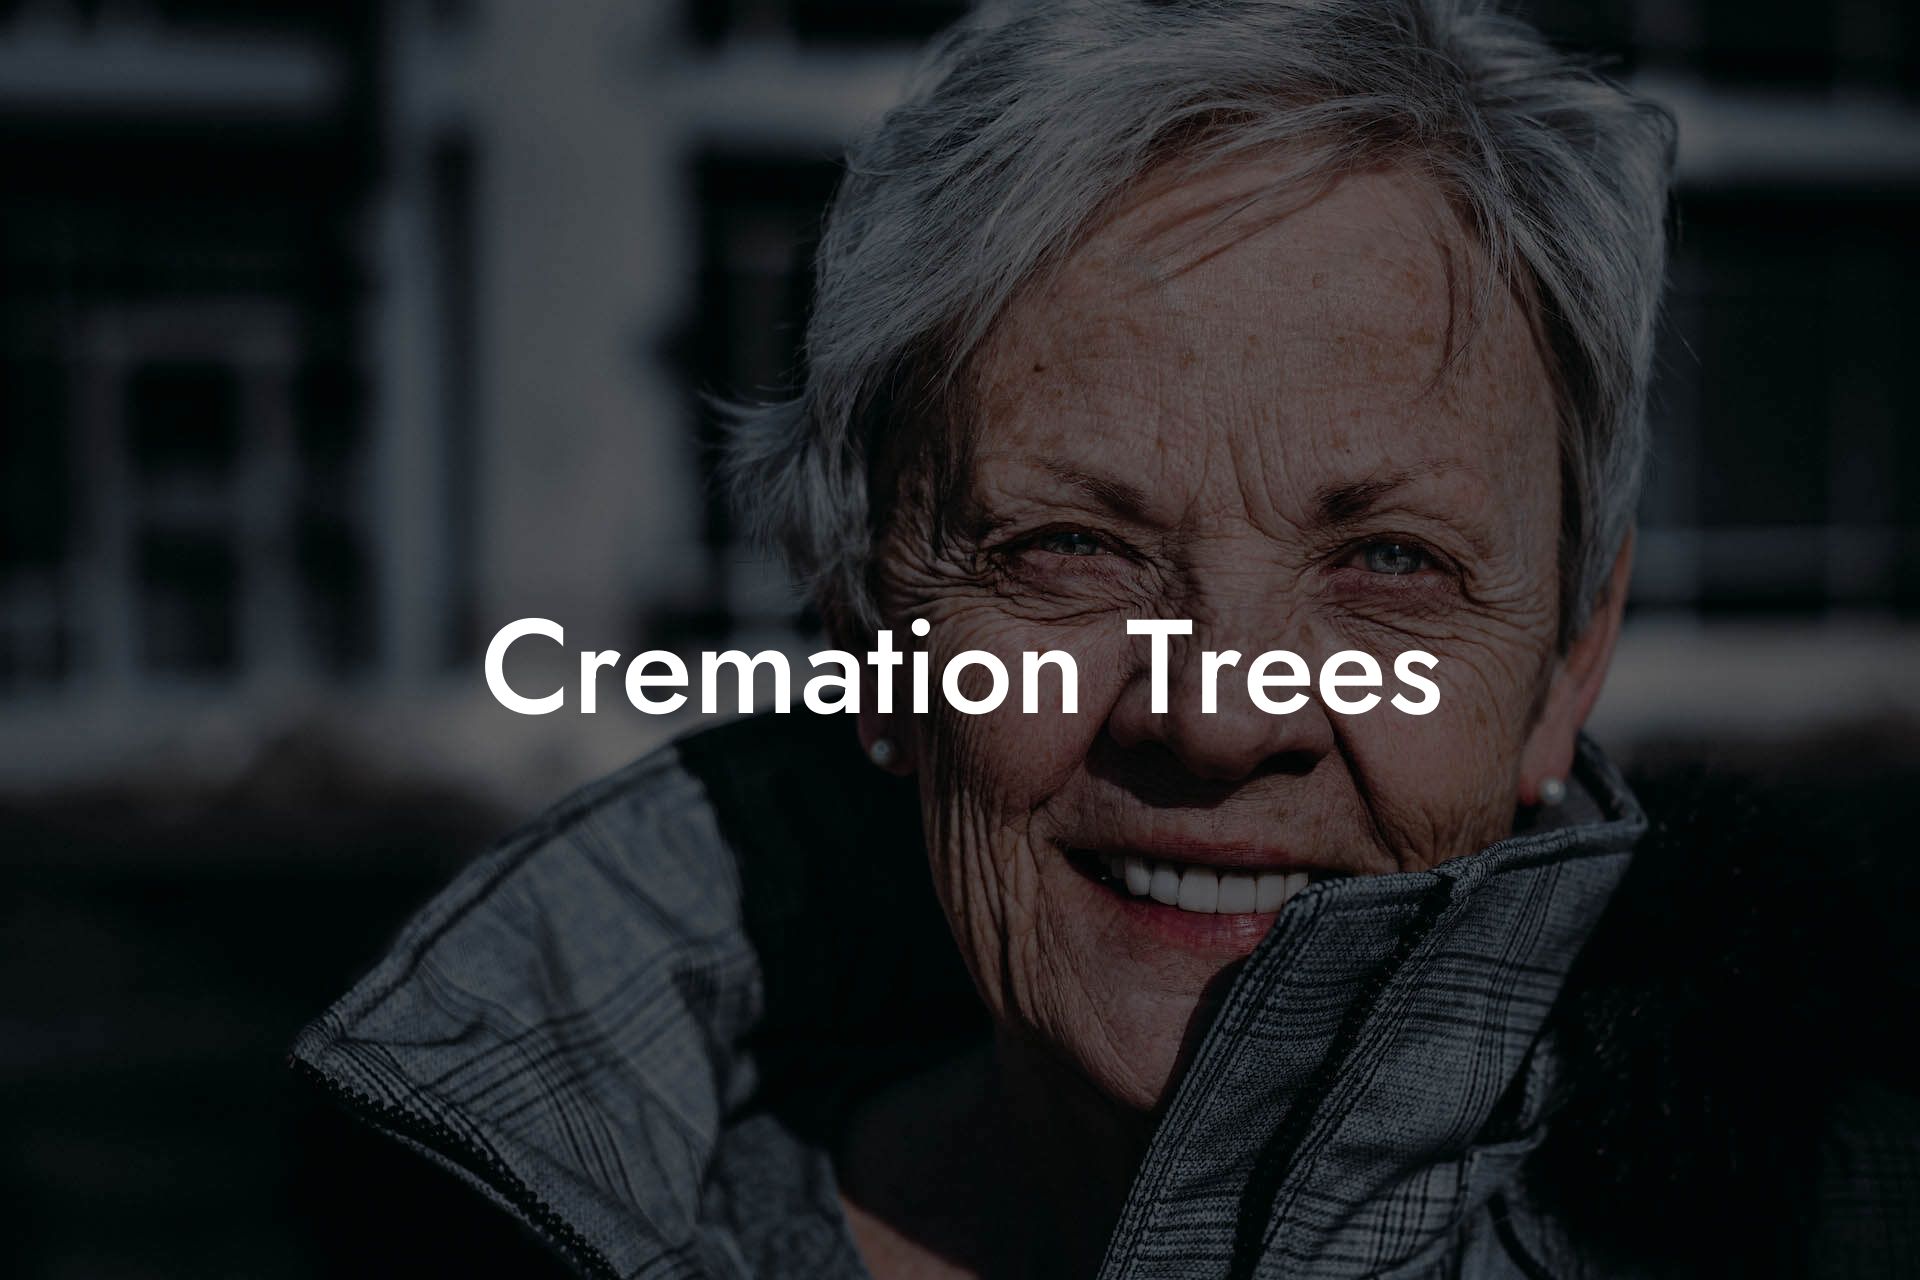 Cremation Trees